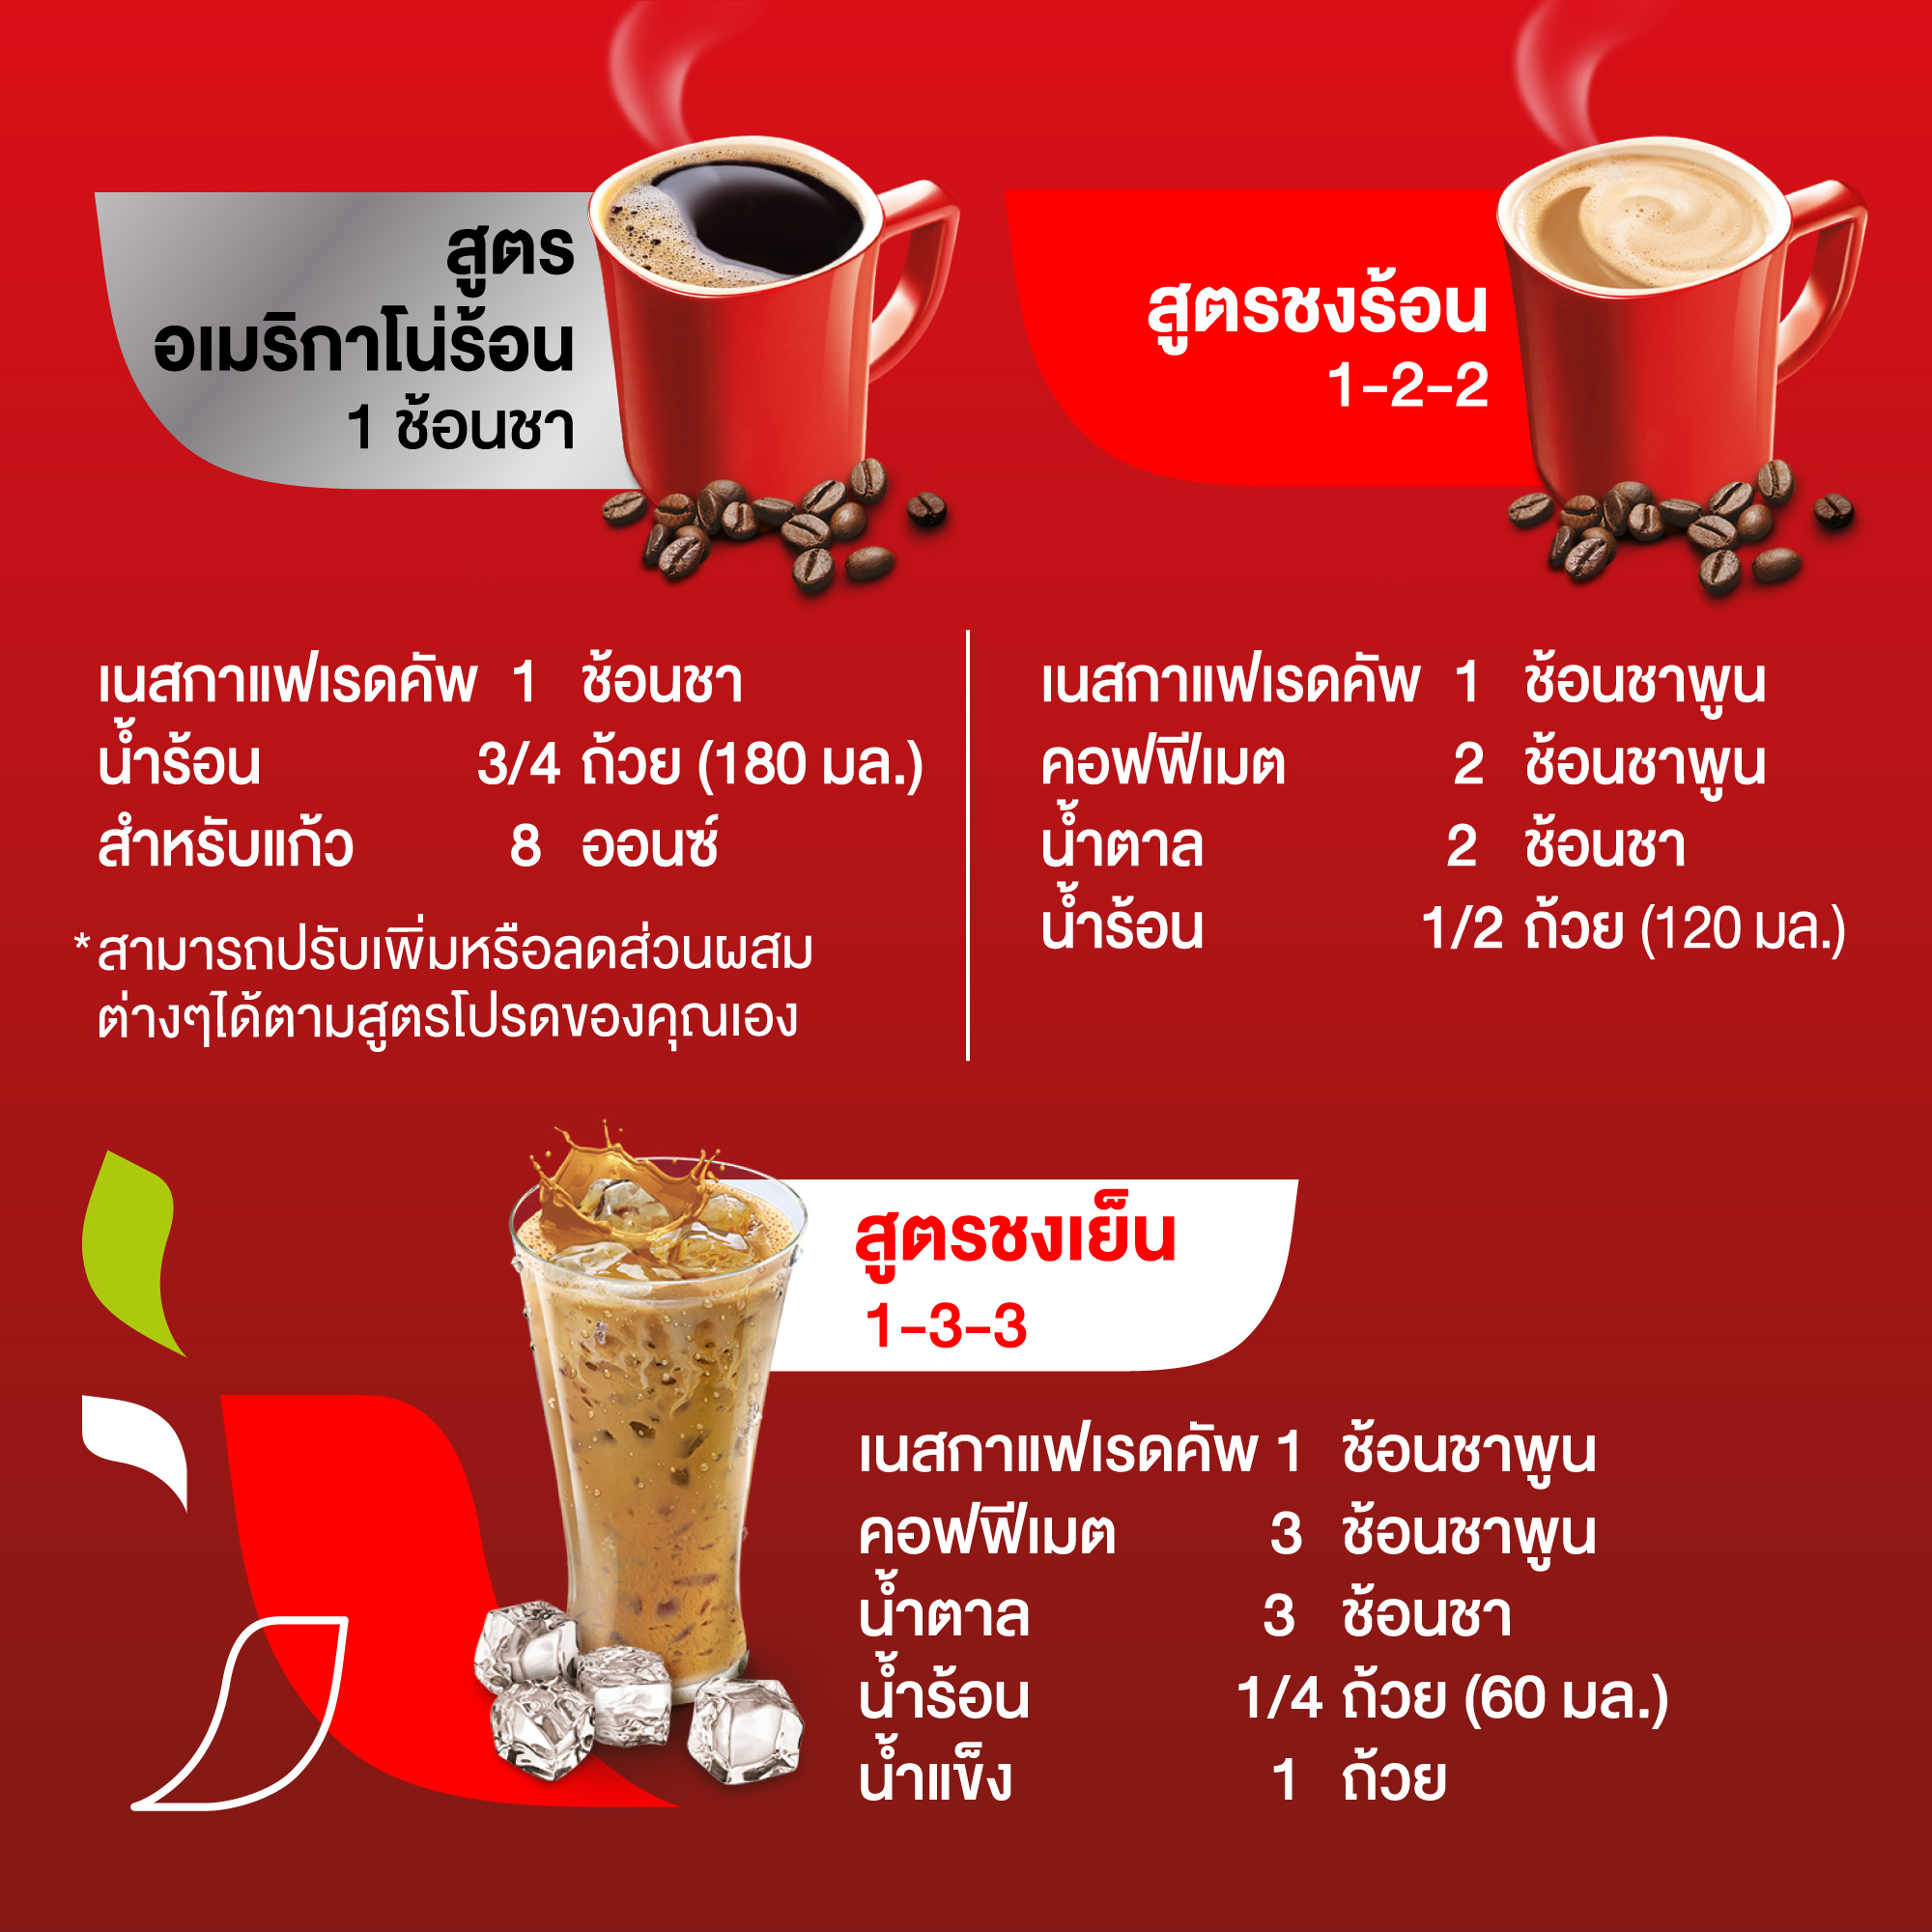 NESCAFÉ Red Cup Black Roast เนสกาแฟ เรดคัพ กาแฟสำเร็จรูป แบล็คโรสต์ แบบขวดแก้ว ขนาด 100 กรัม (แพ็ค 3 ขวด) [ NESCAFE ]